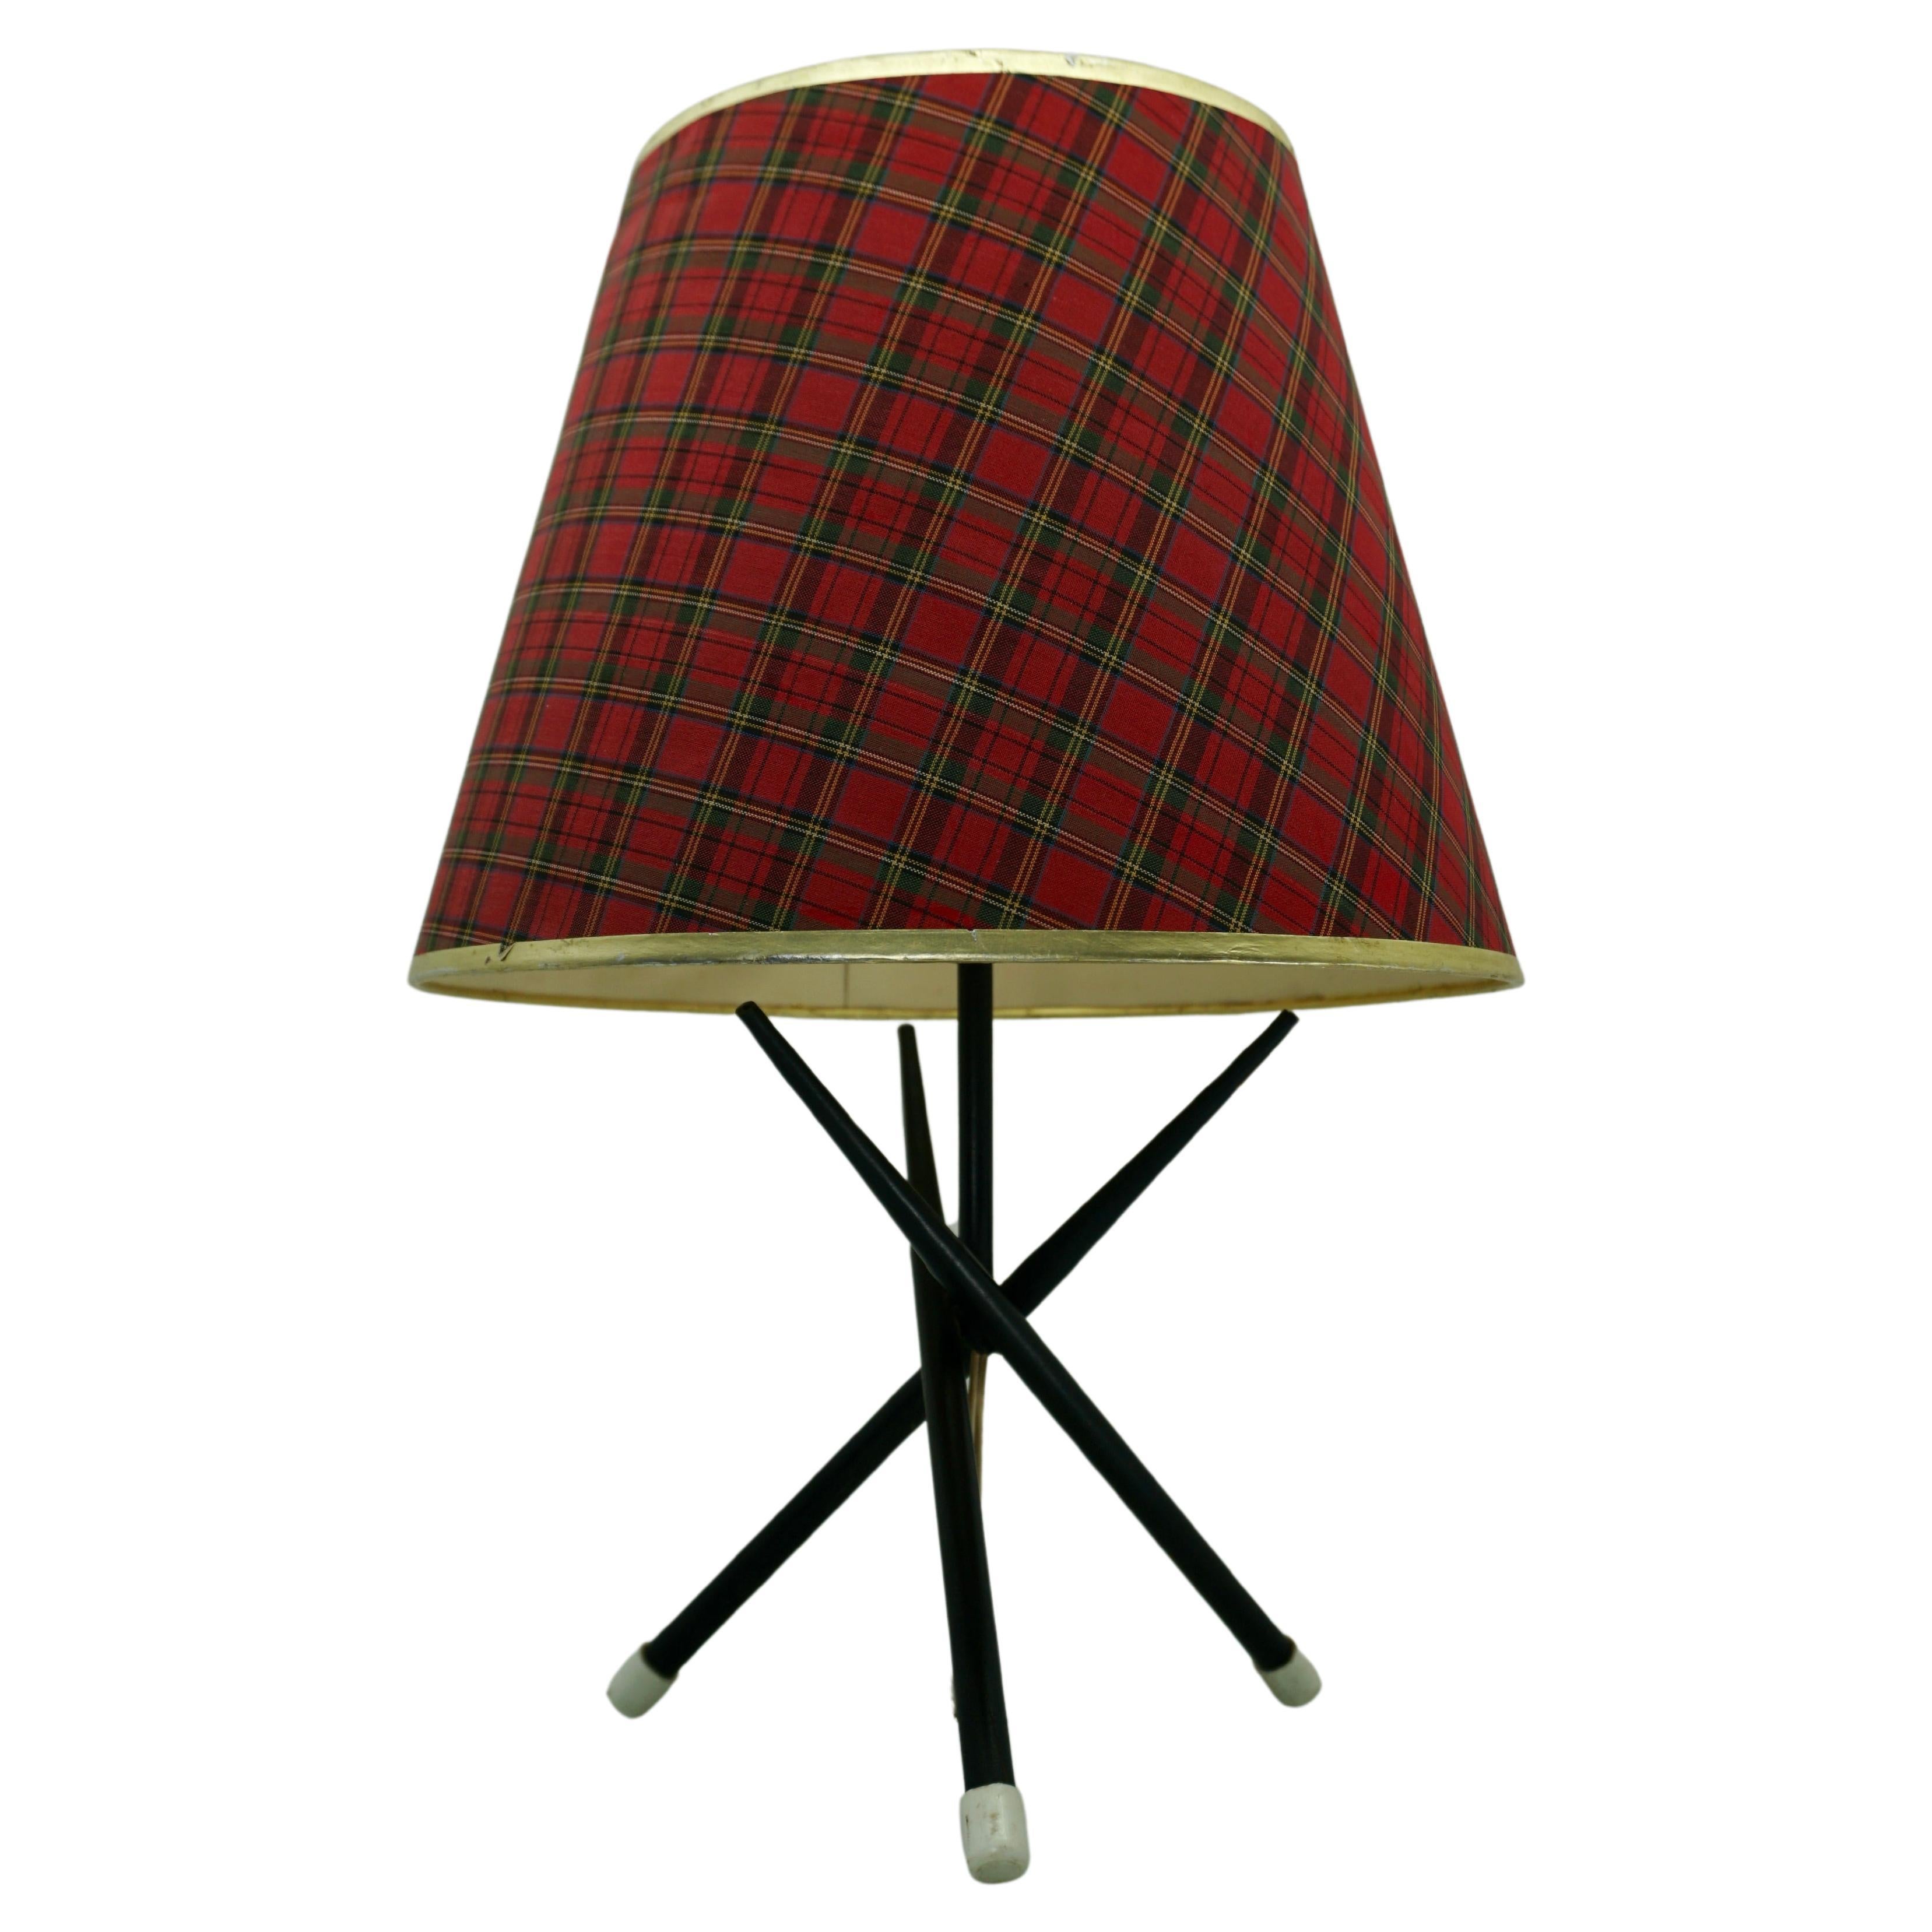 Rare 1950s tripod Louis Kalff table lamp.